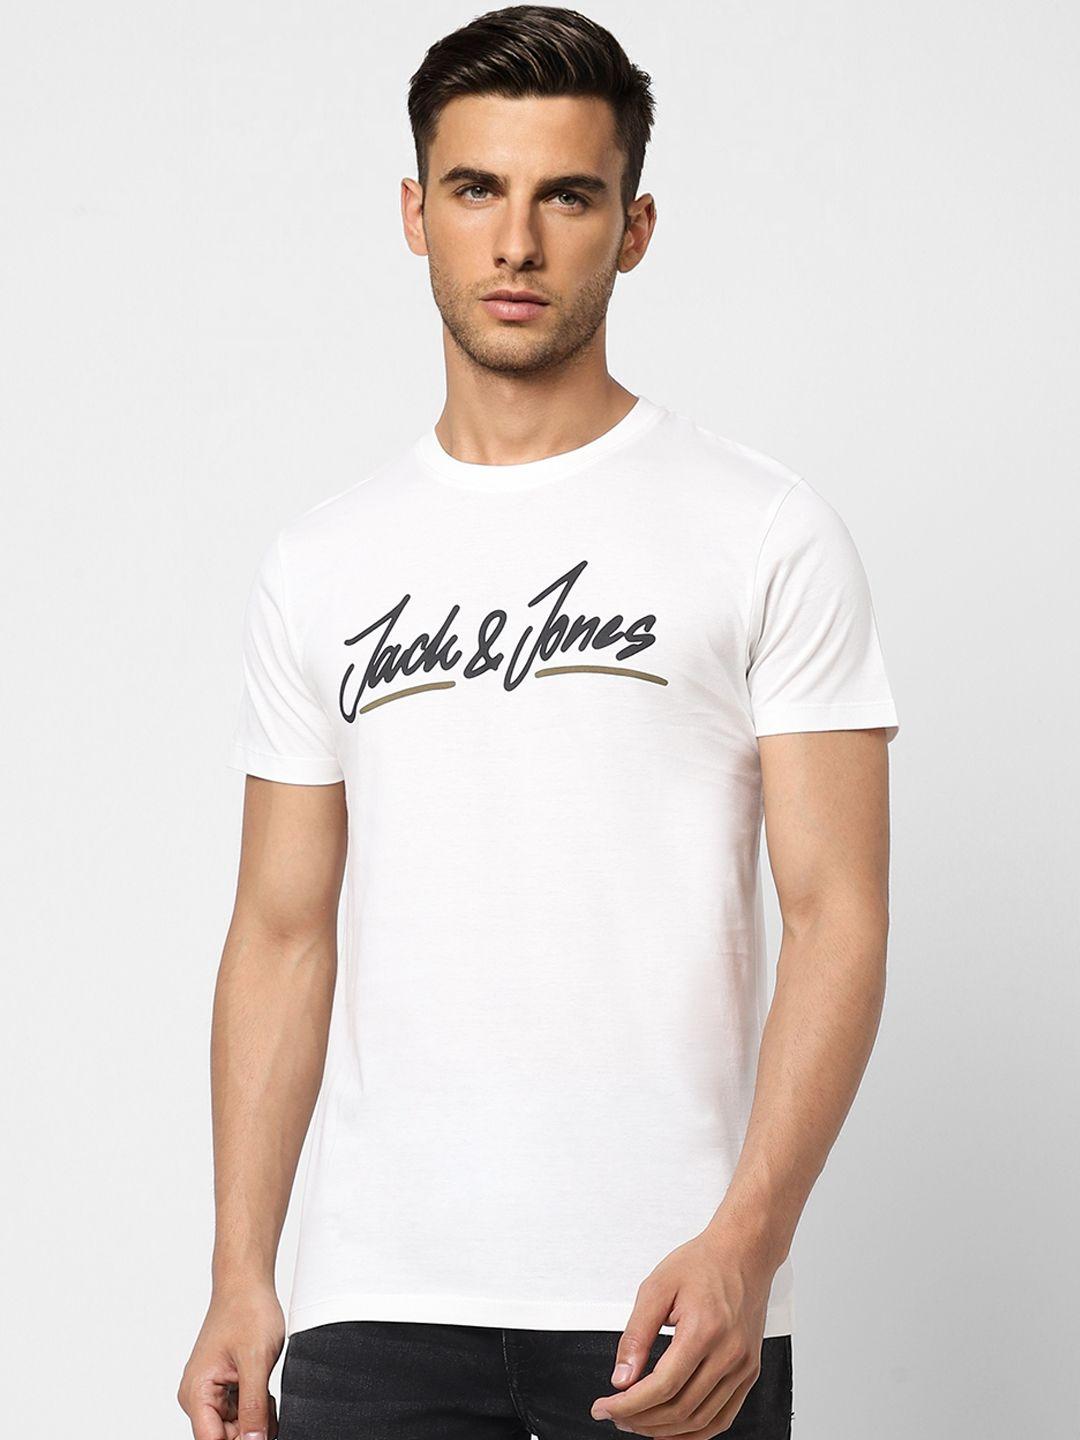 jack & jones men white & black brand logo printed pure cotton slim fit t-shirt